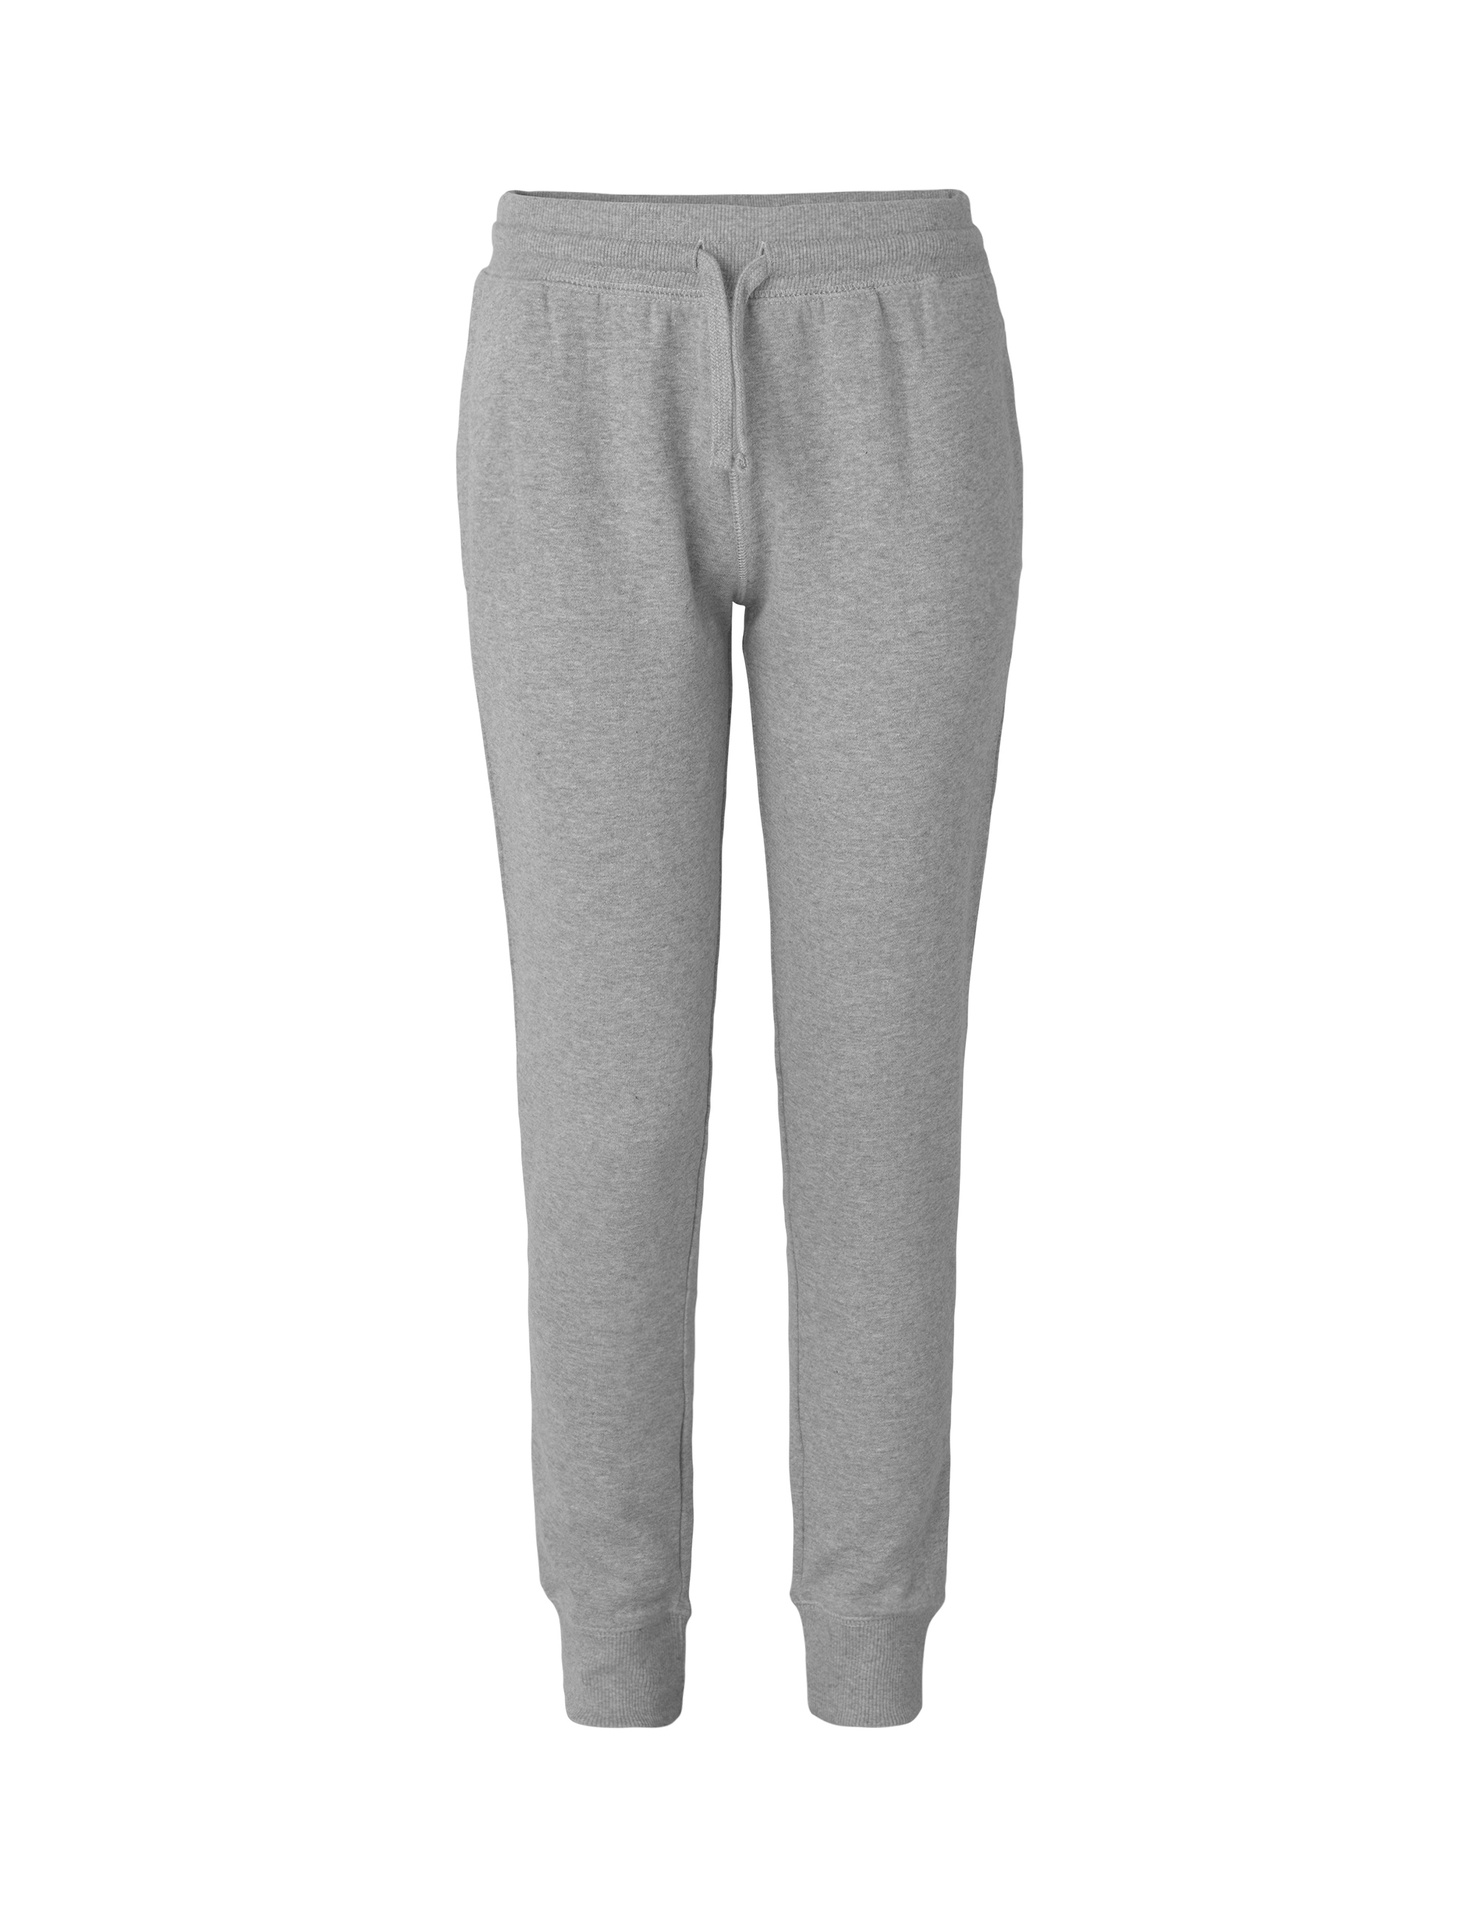 [PR/05574] Kids Sweatpants (Sport Grey 21, 140/146 cm)